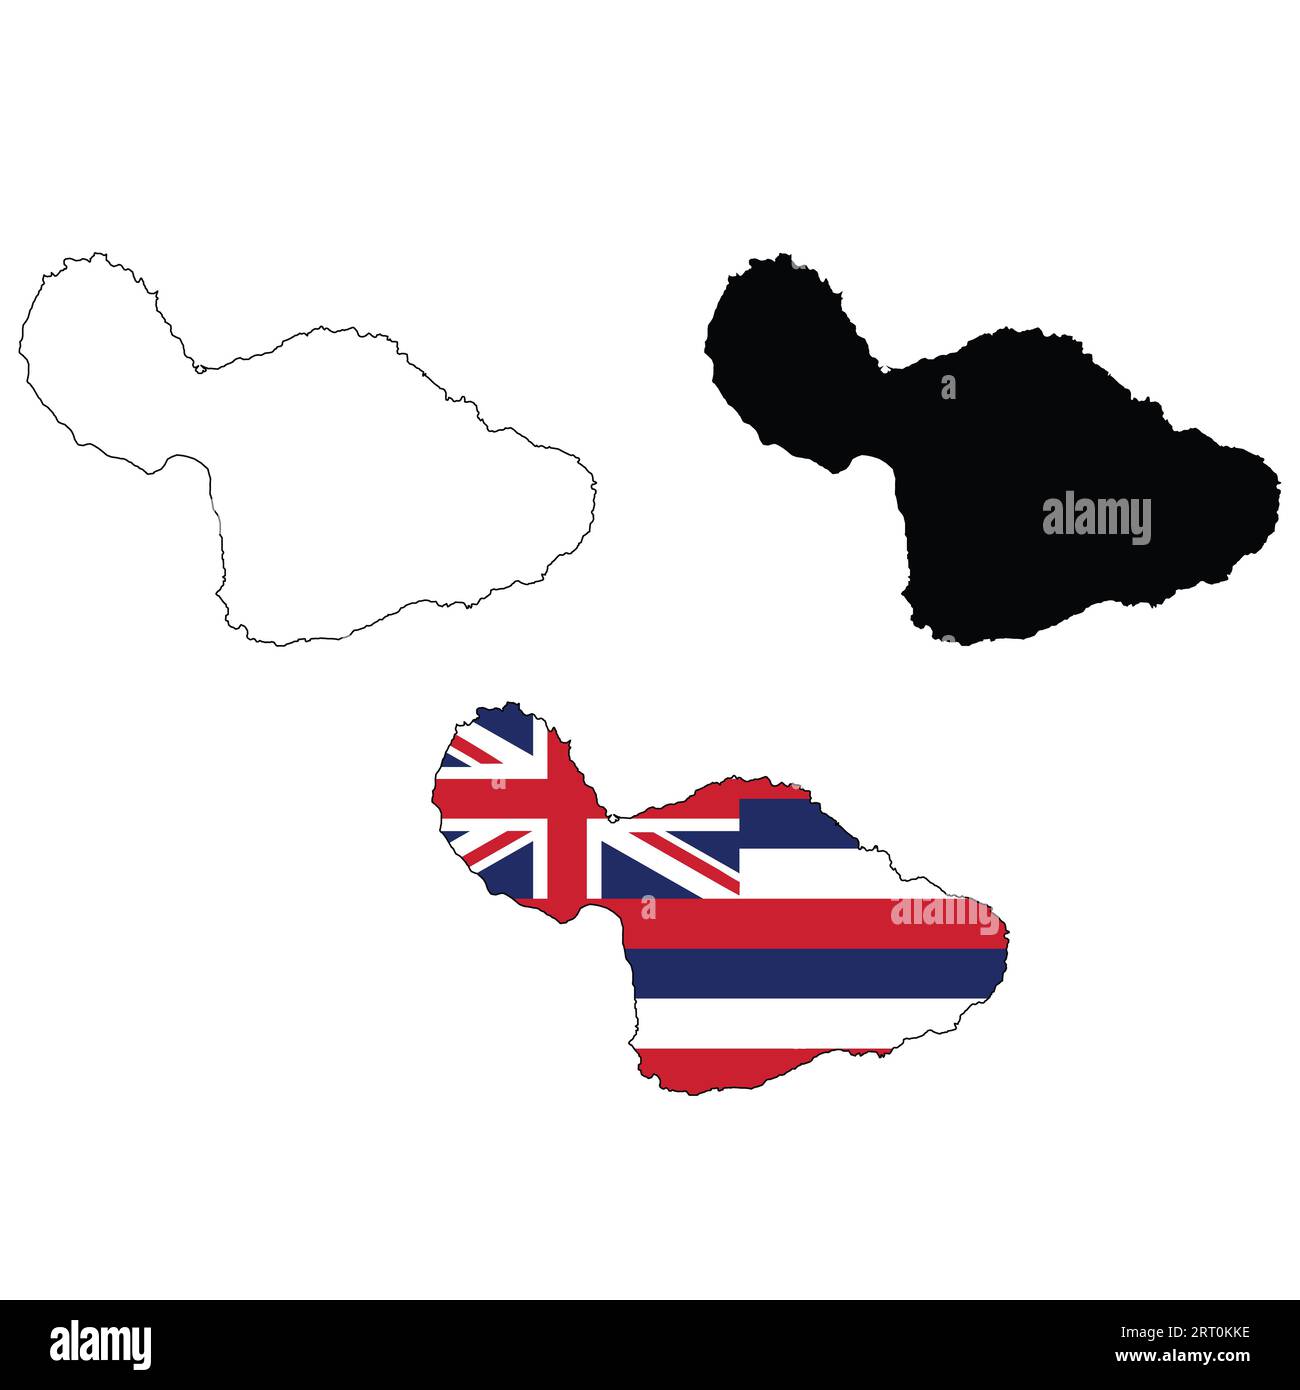 Maui-Kartensymbol. Maui Island Clipart. Karte Mit Maui-Flagge Svg. Modellstruktur. Flacher Stil. Stockfoto